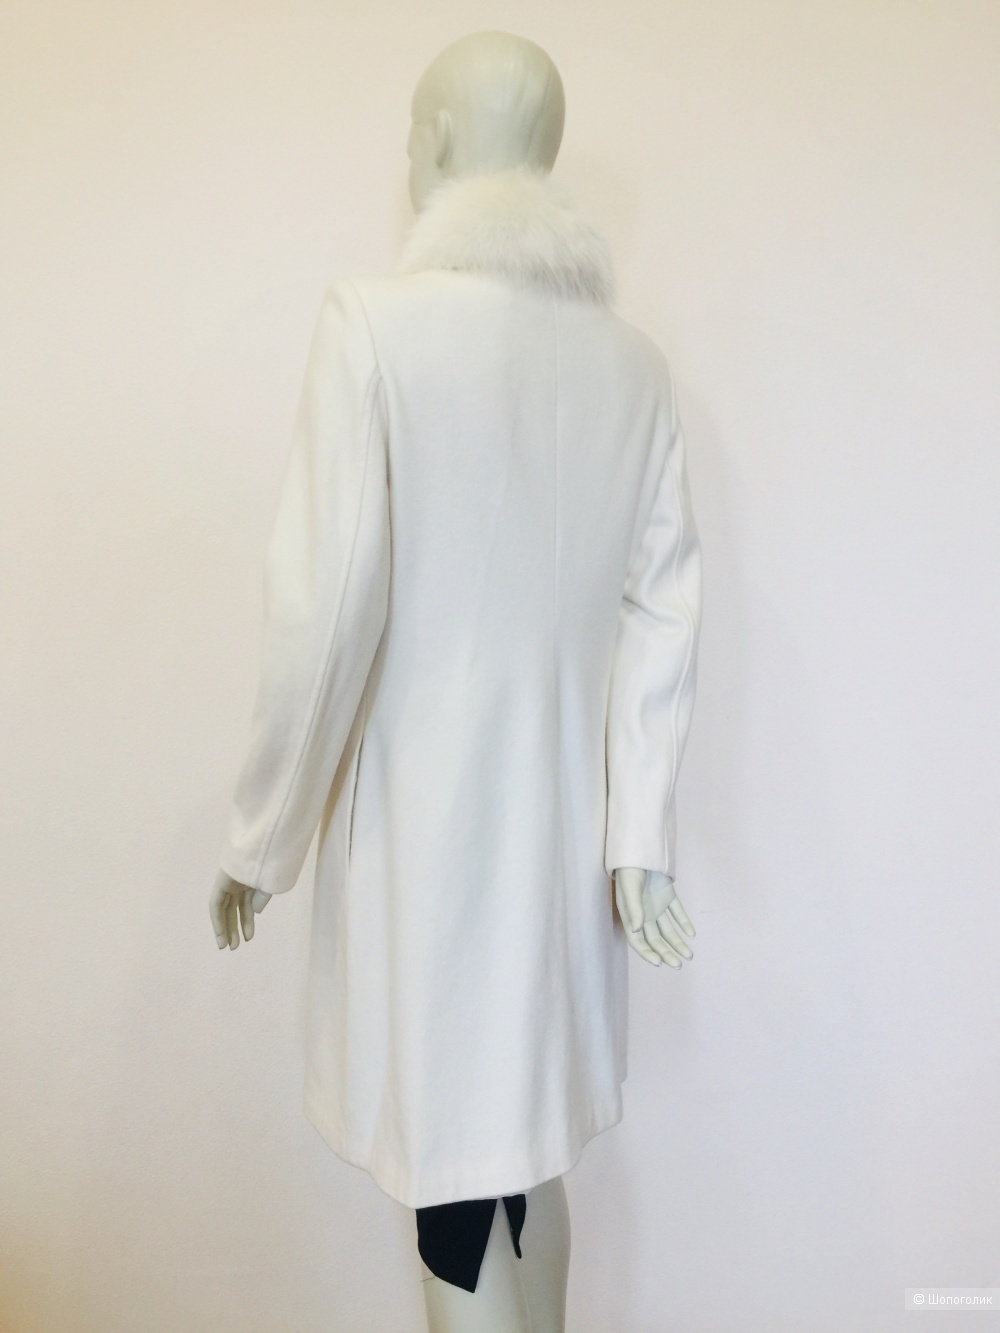 Пальто Бренд La Reine Blanche размер 48-50 L-XL